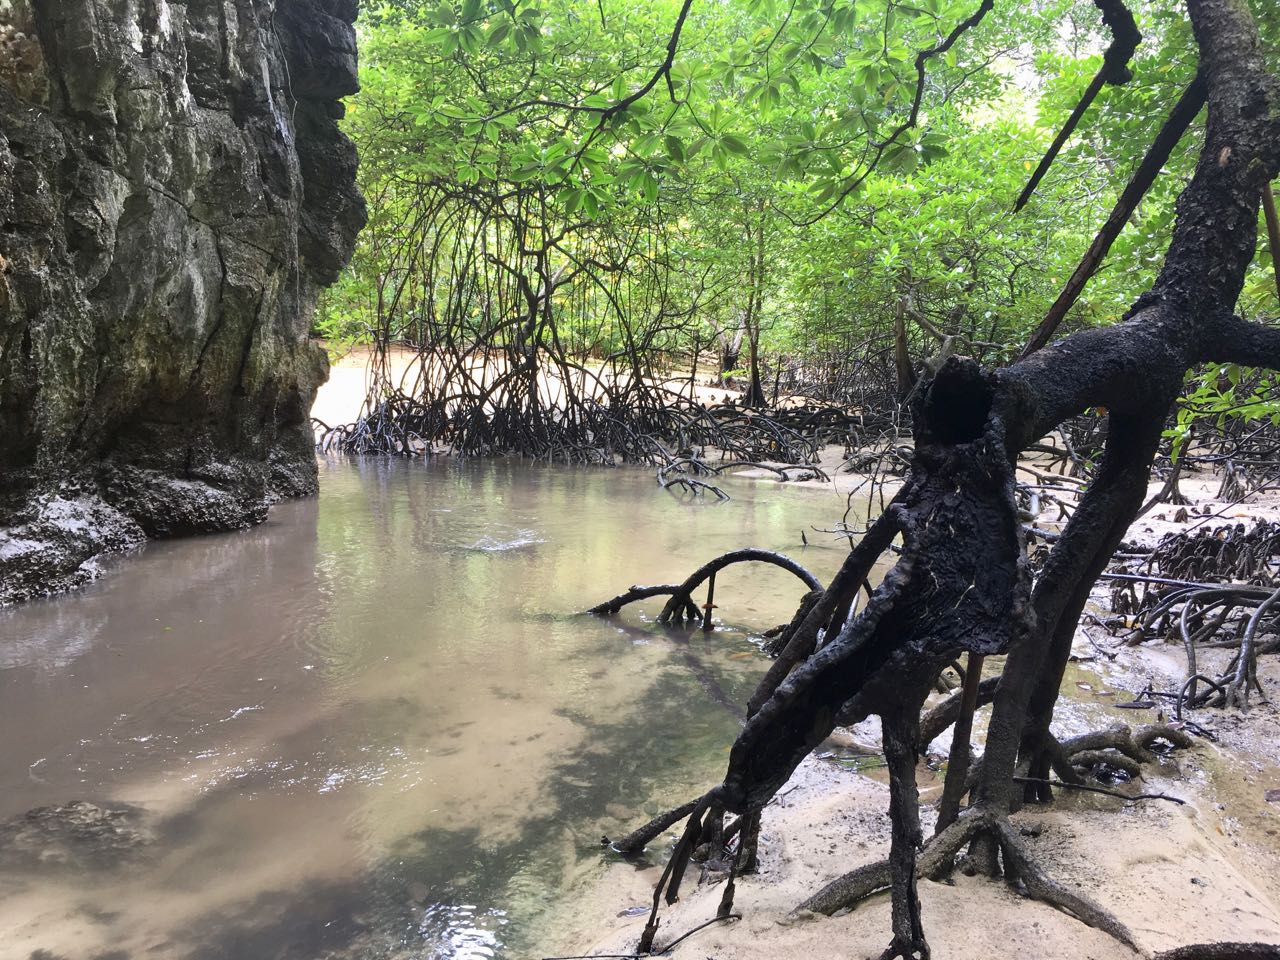 Exploring hidden Mangrove Forests